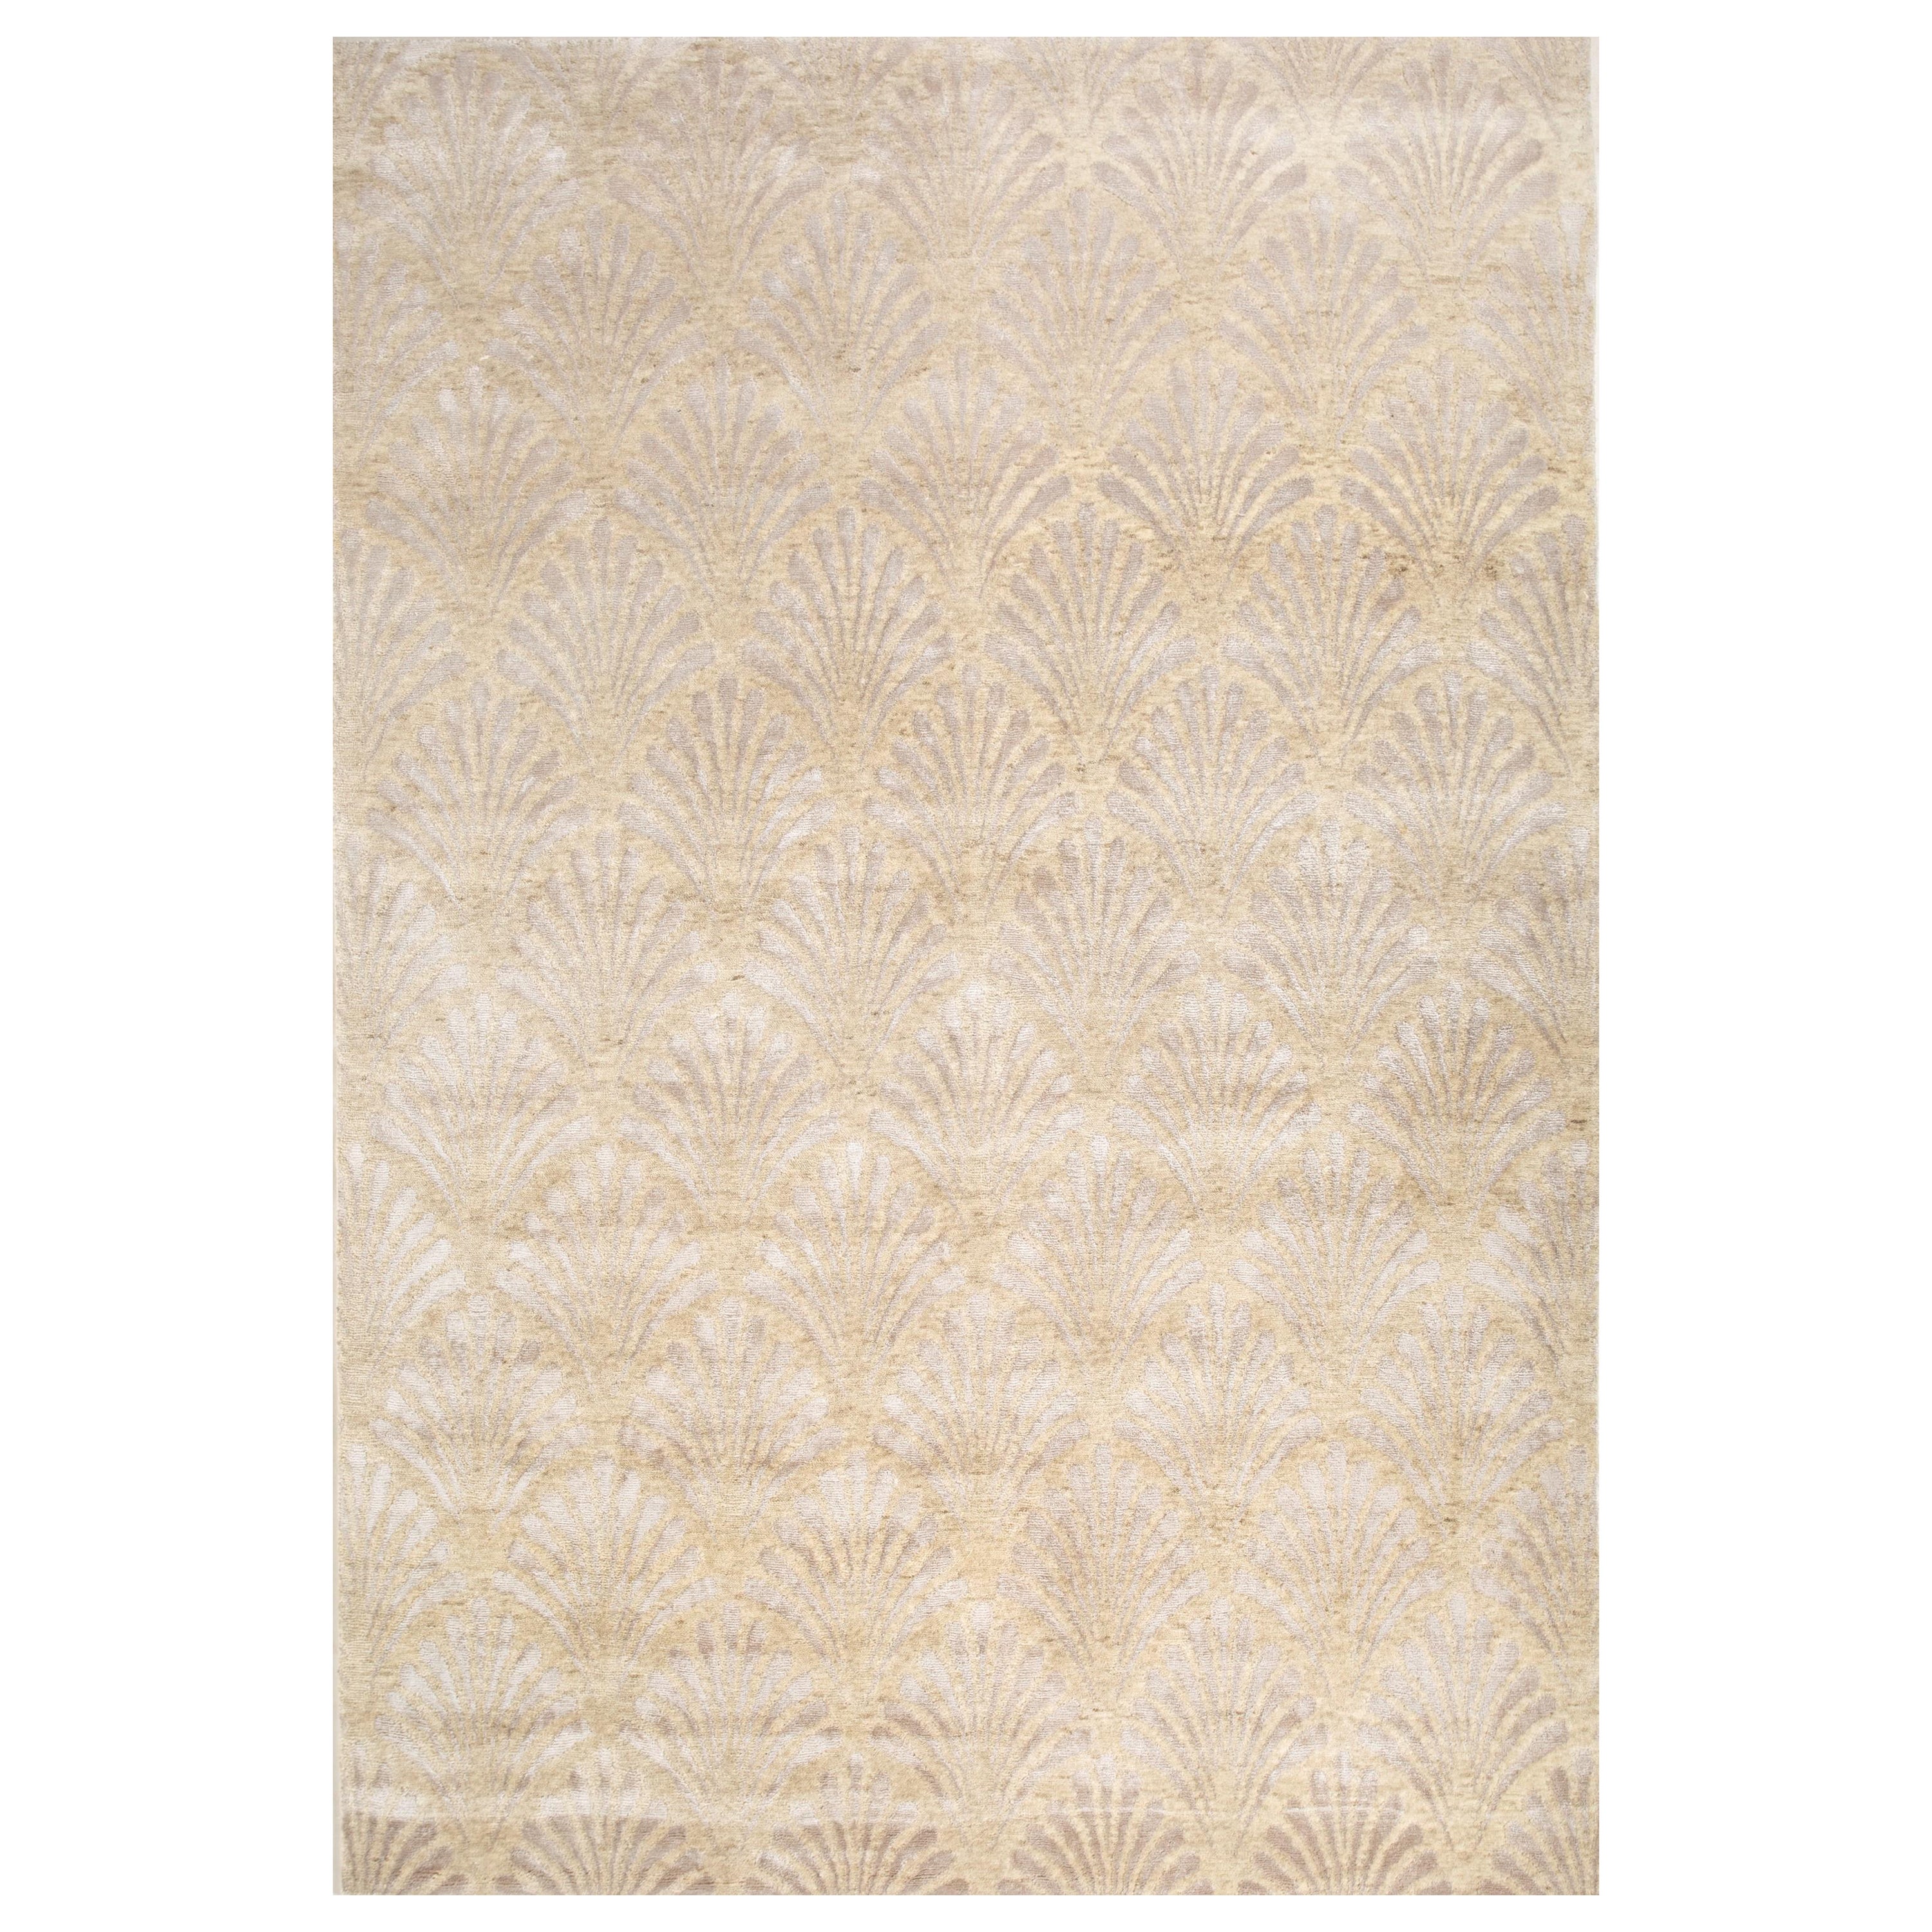 Serenity Bliss Medium Tan & Weiß 180X270 cm Handgeknüpfter Teppich